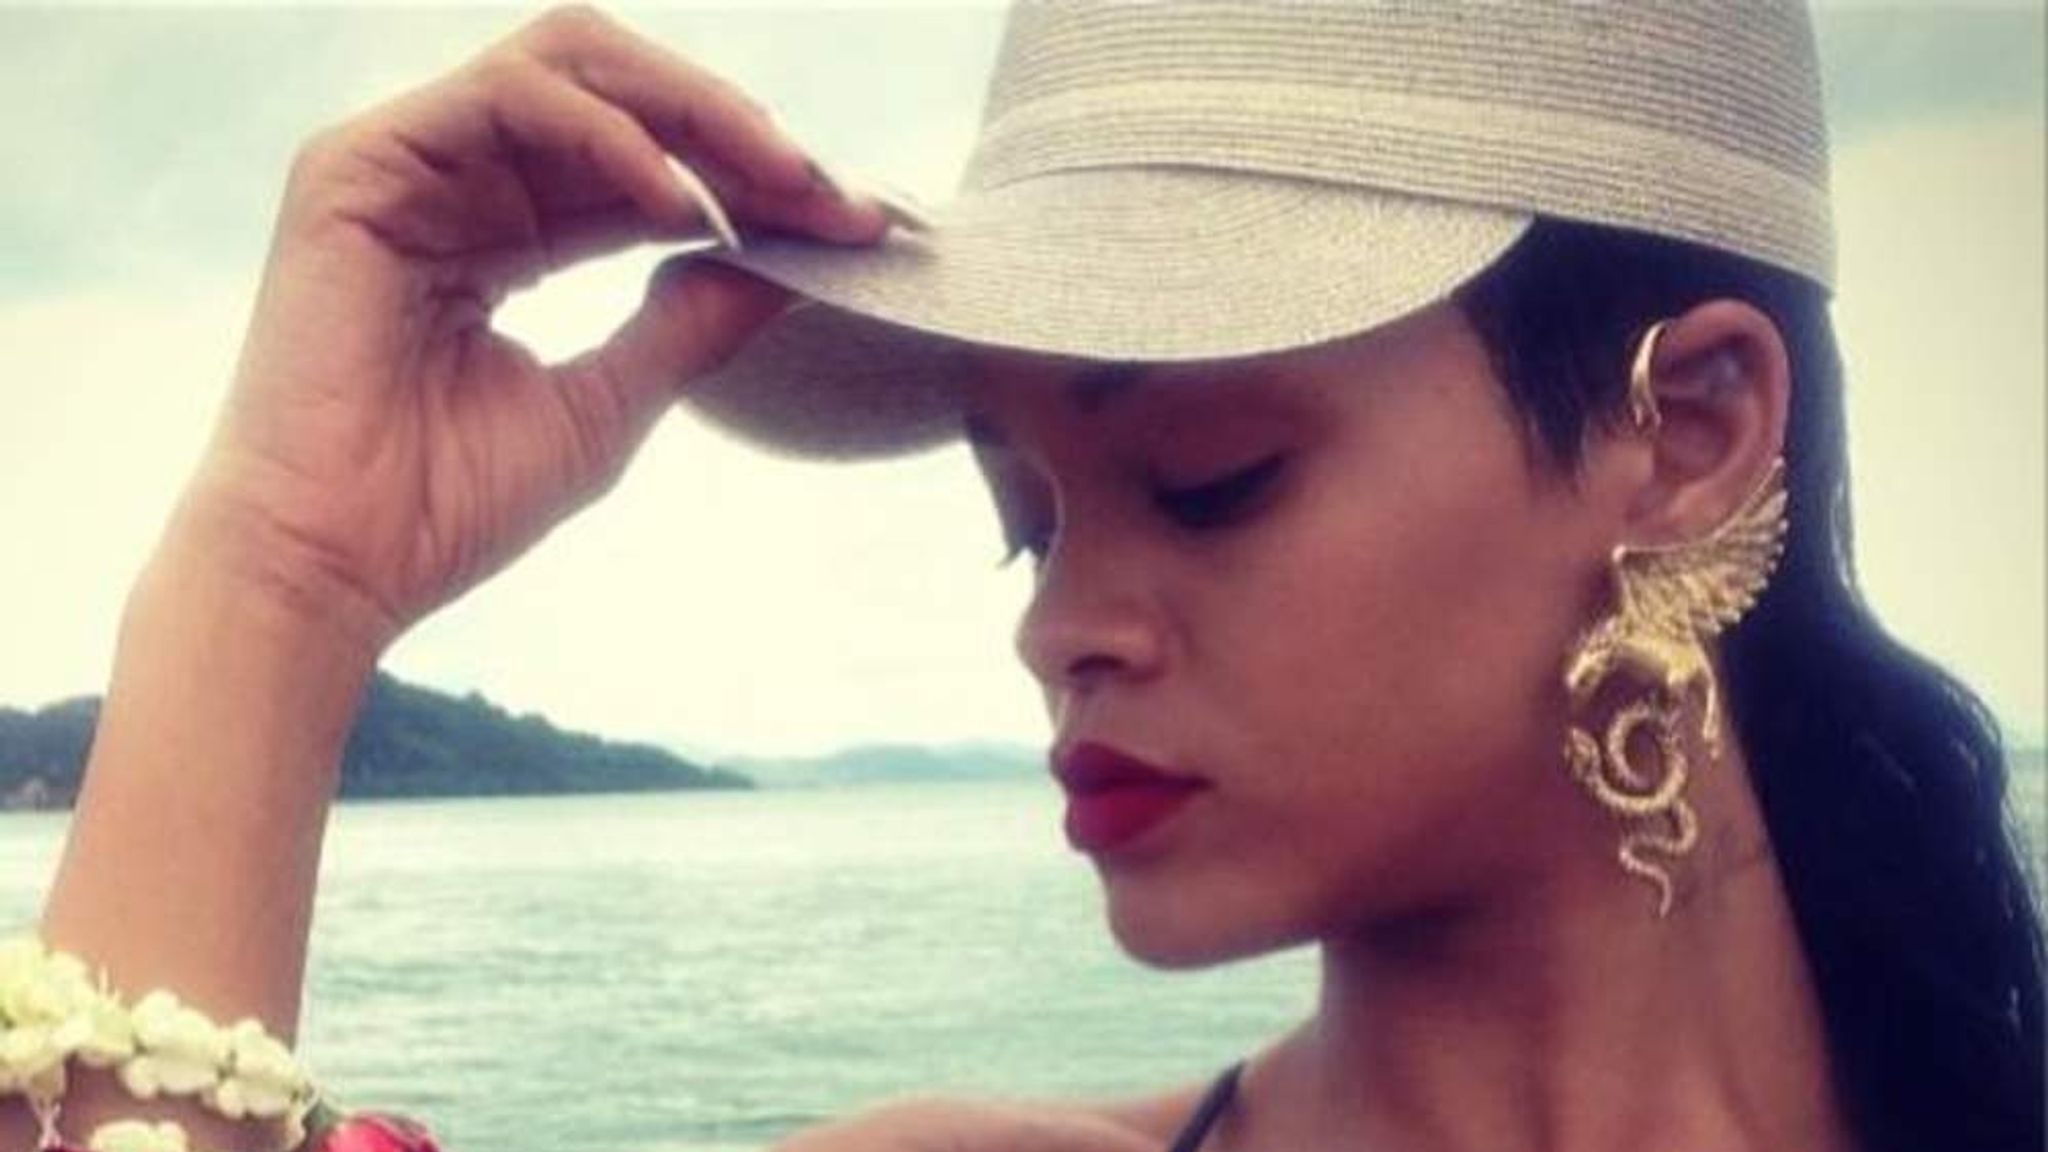 Rihanna Tweet Sparks Thailand Sex Show Arrest Ents And Arts News Sky News